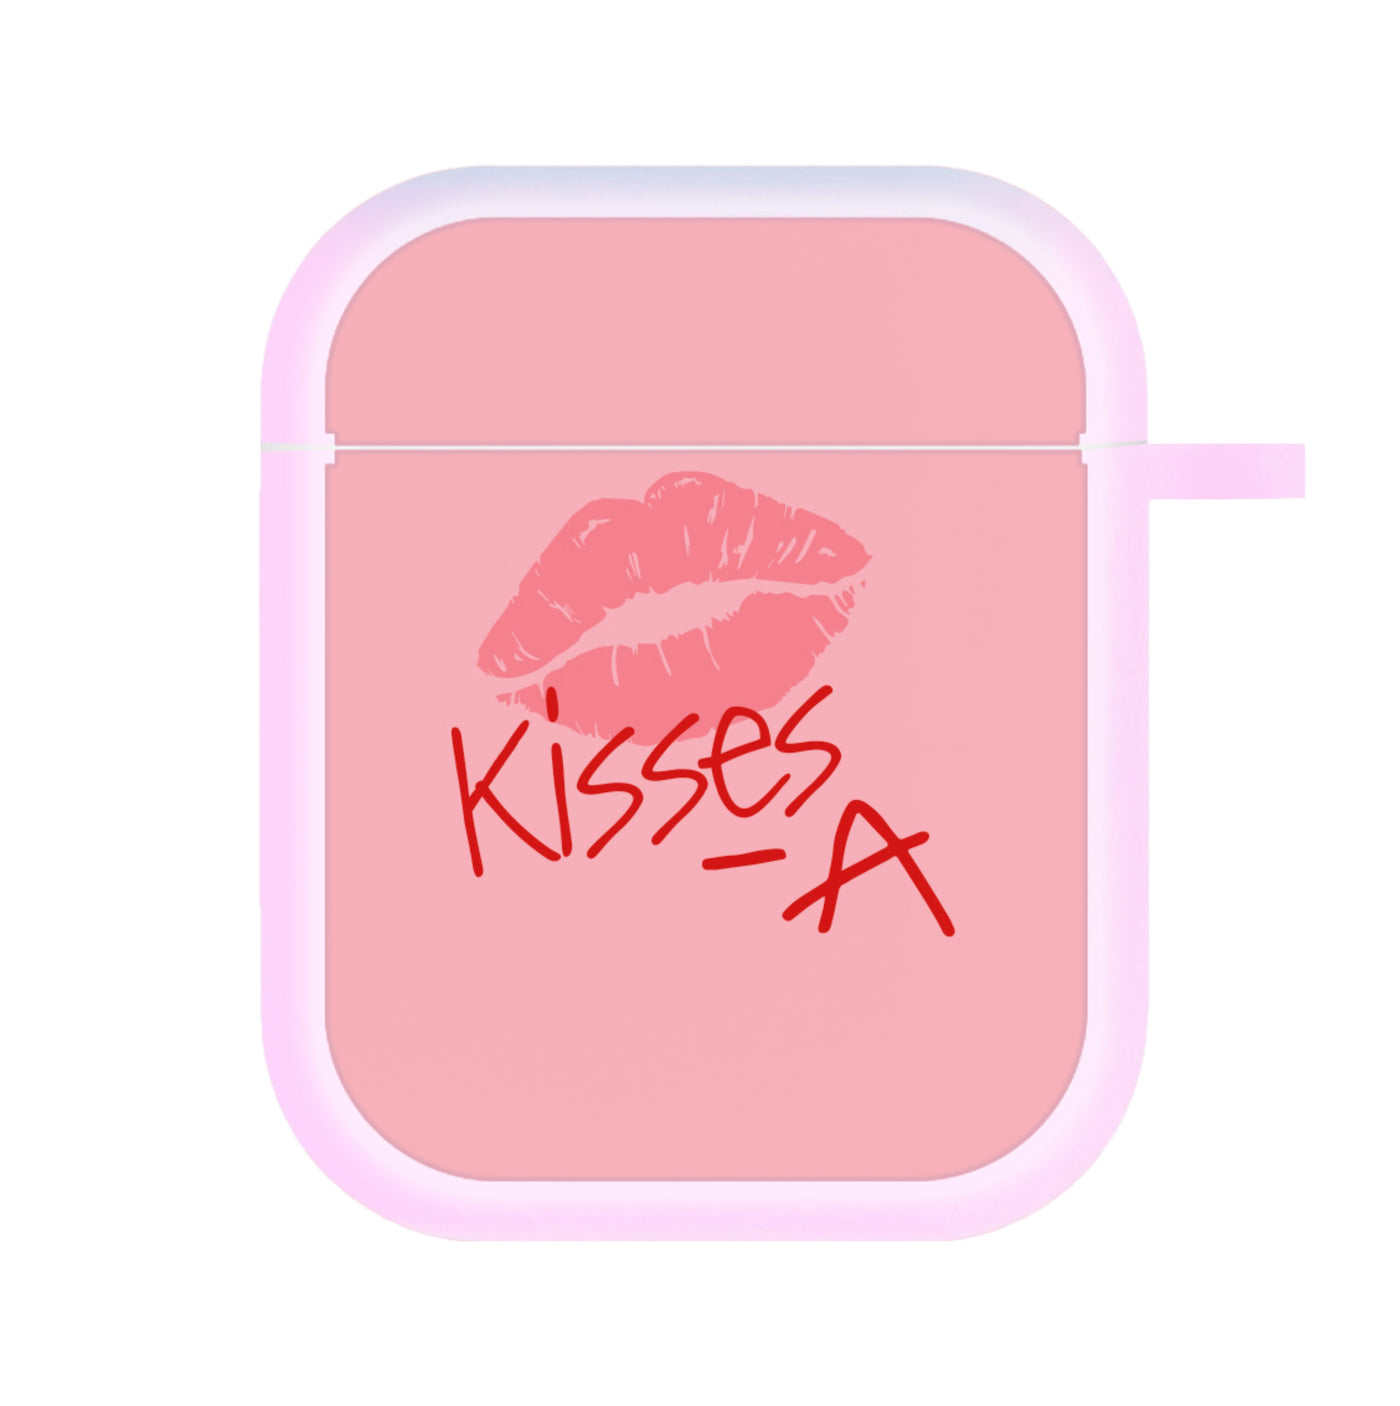 Kisses - A - Pretty Little Liars AirPods Case